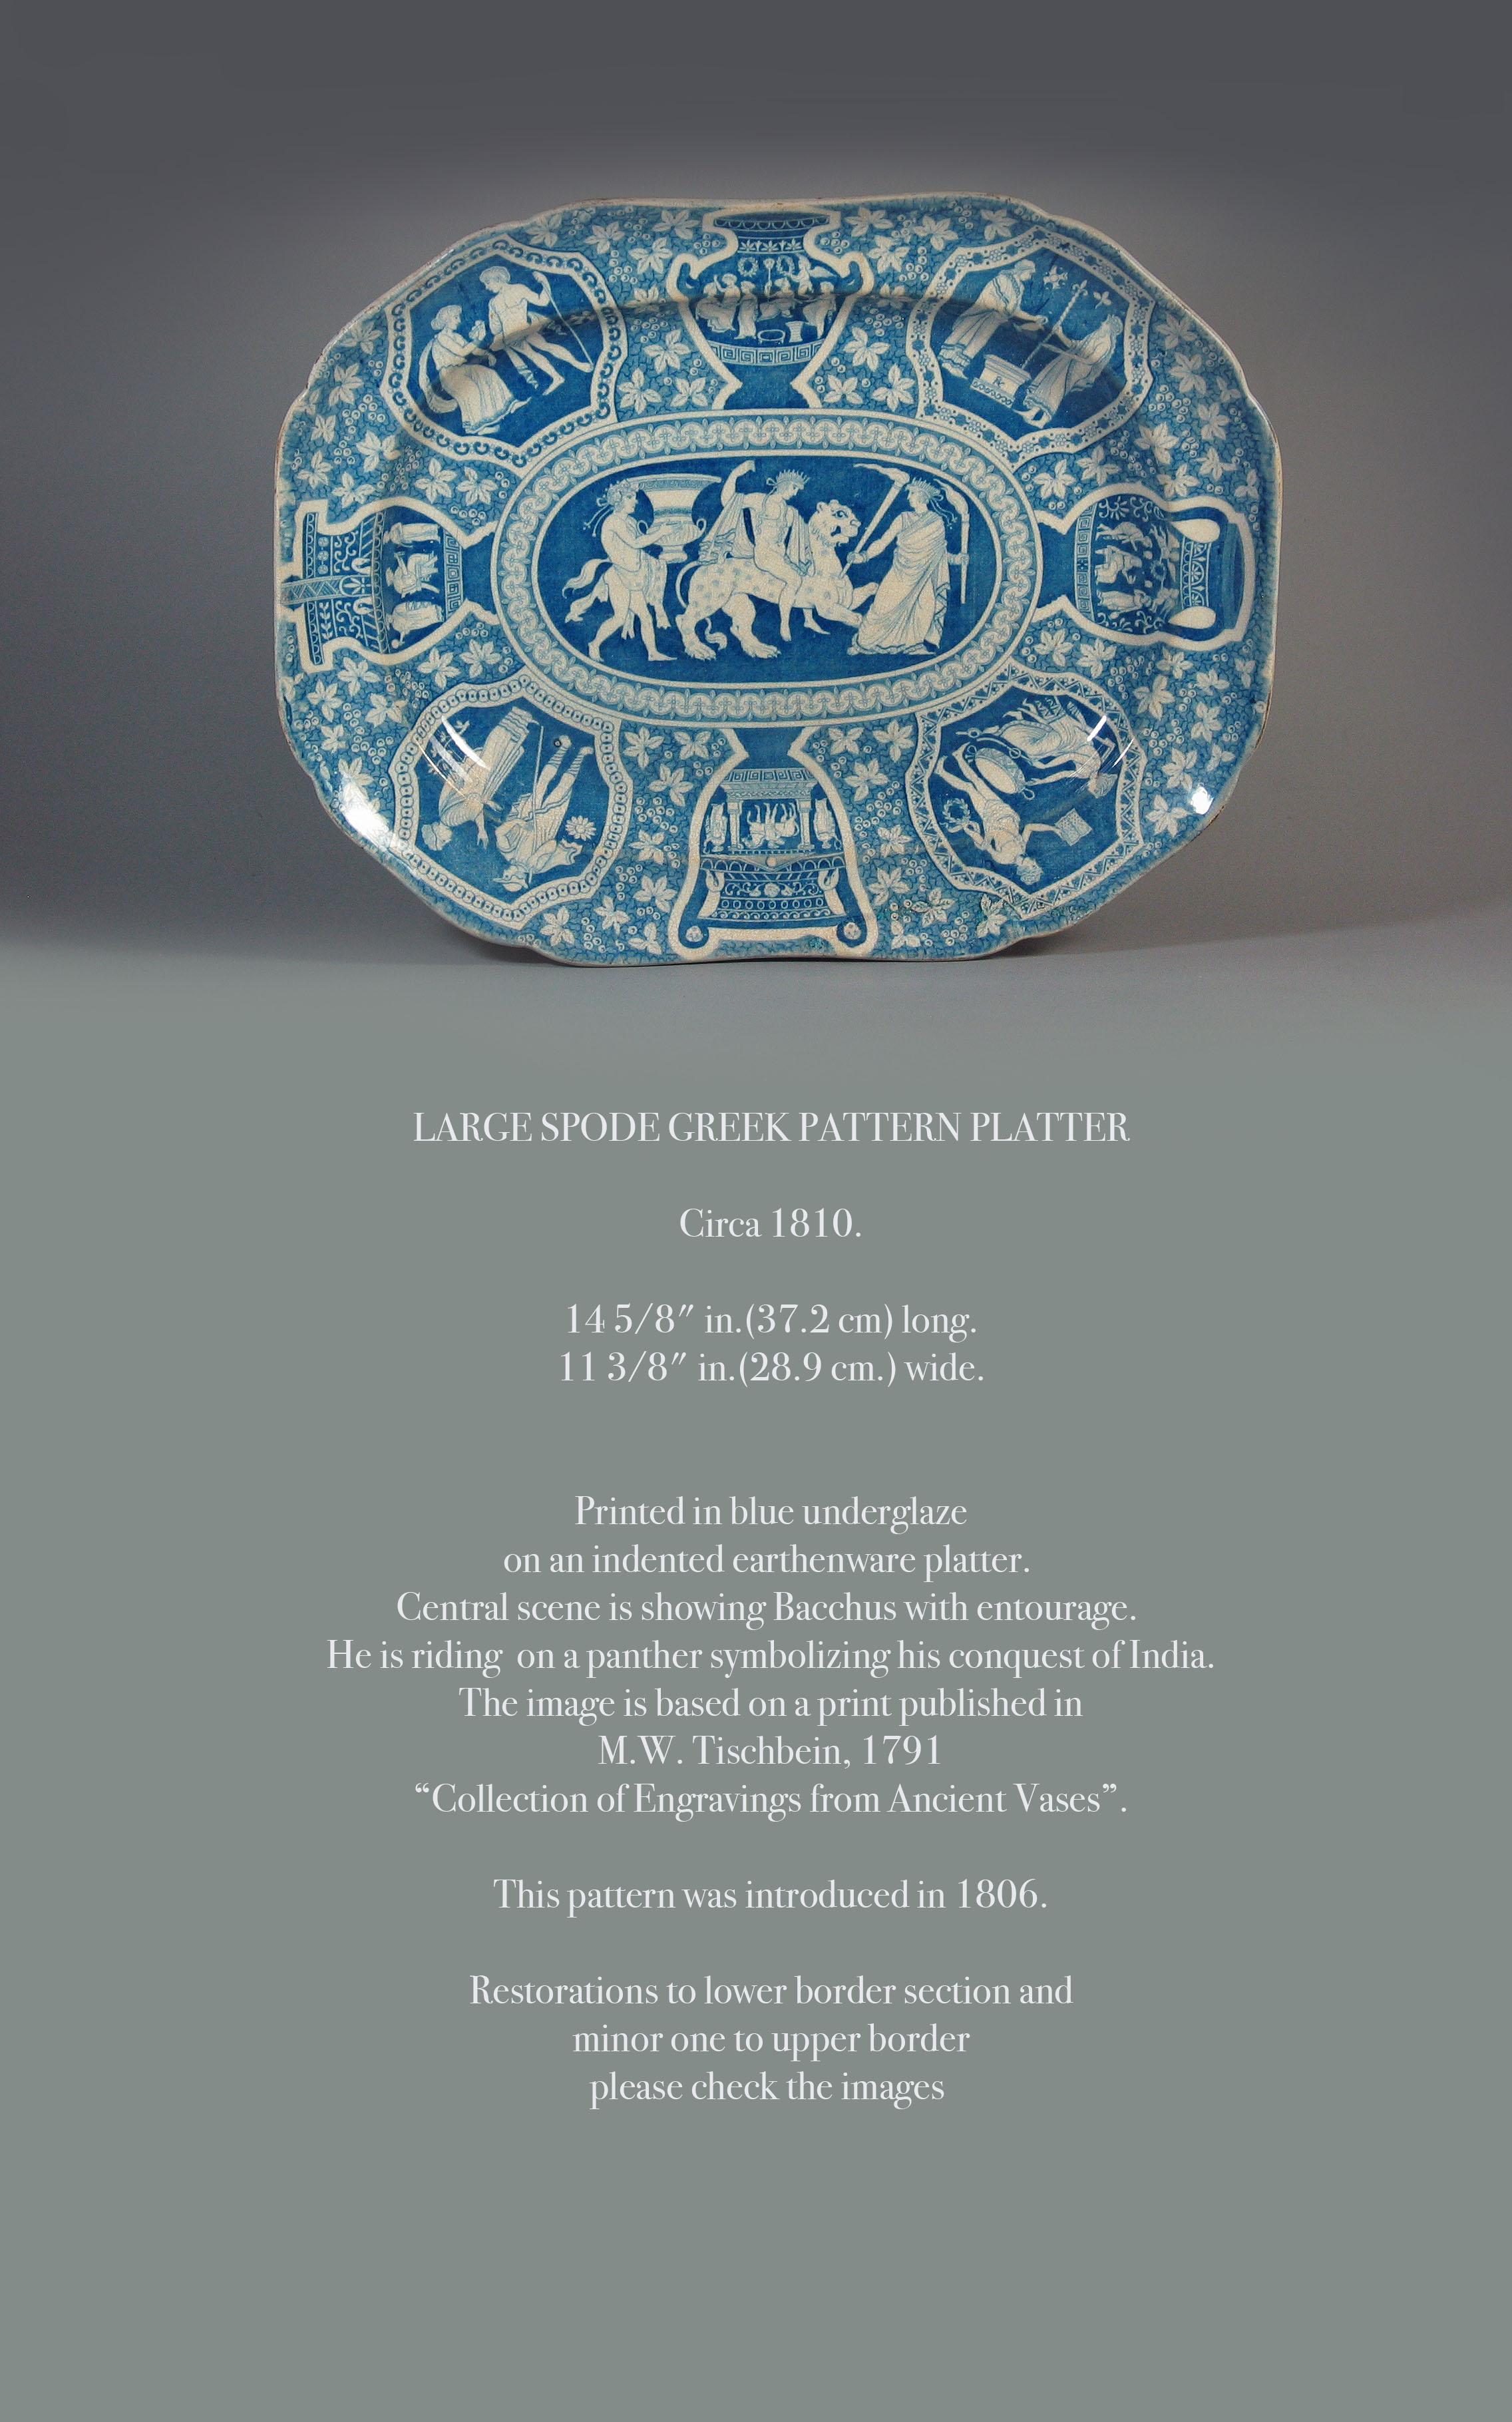 Large Spode Greek Pattern Platter
Circa 1810.

14 5/8